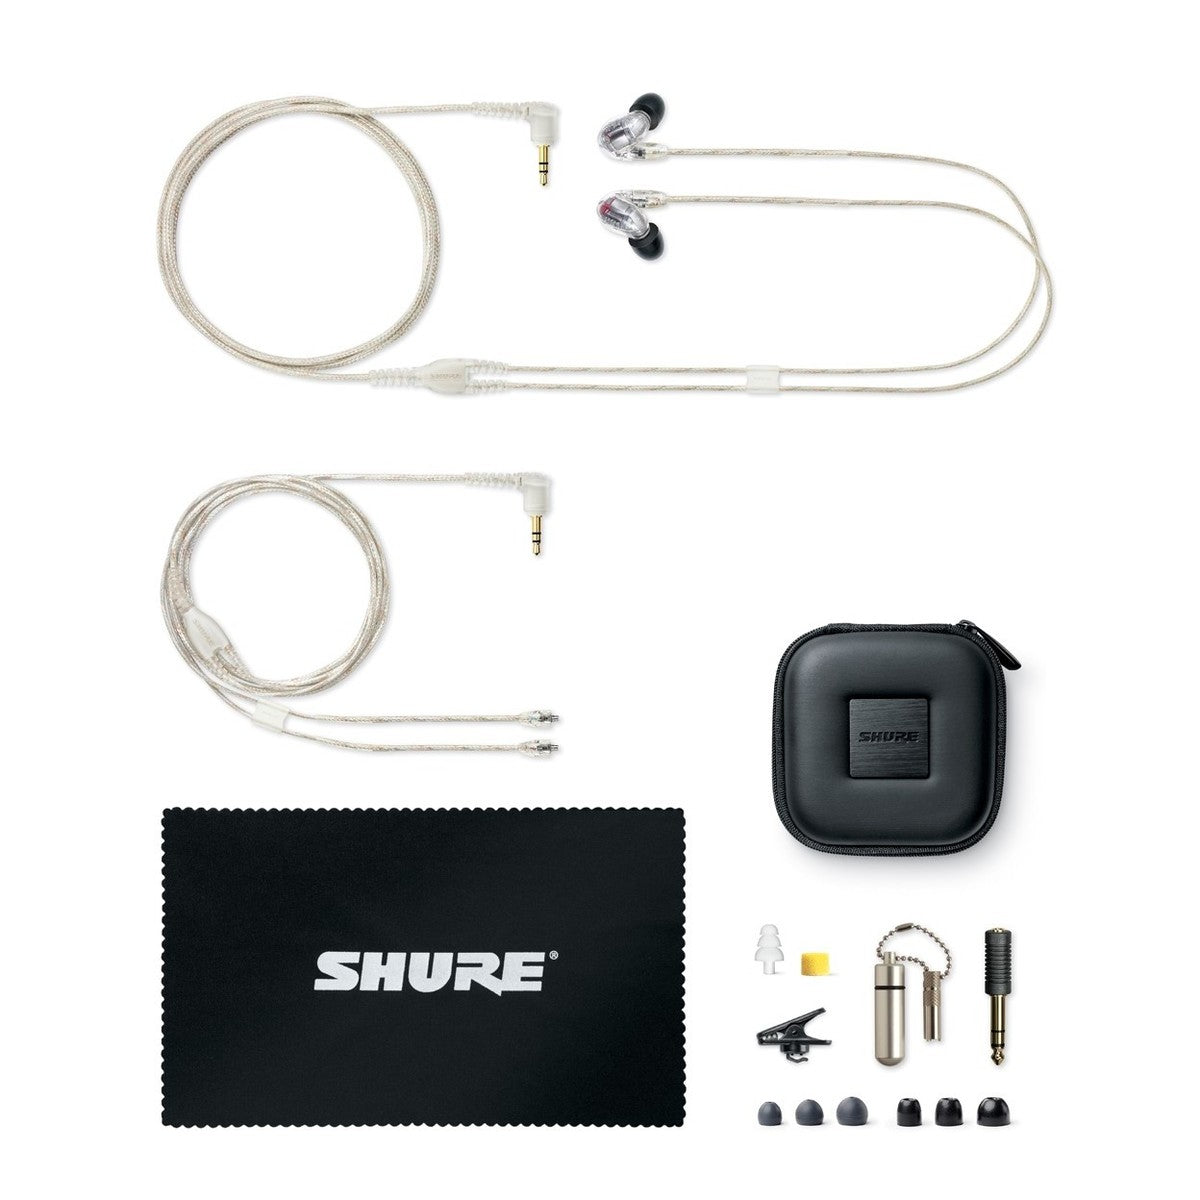 Shure SE846 Pro Sound Isolating Earphones